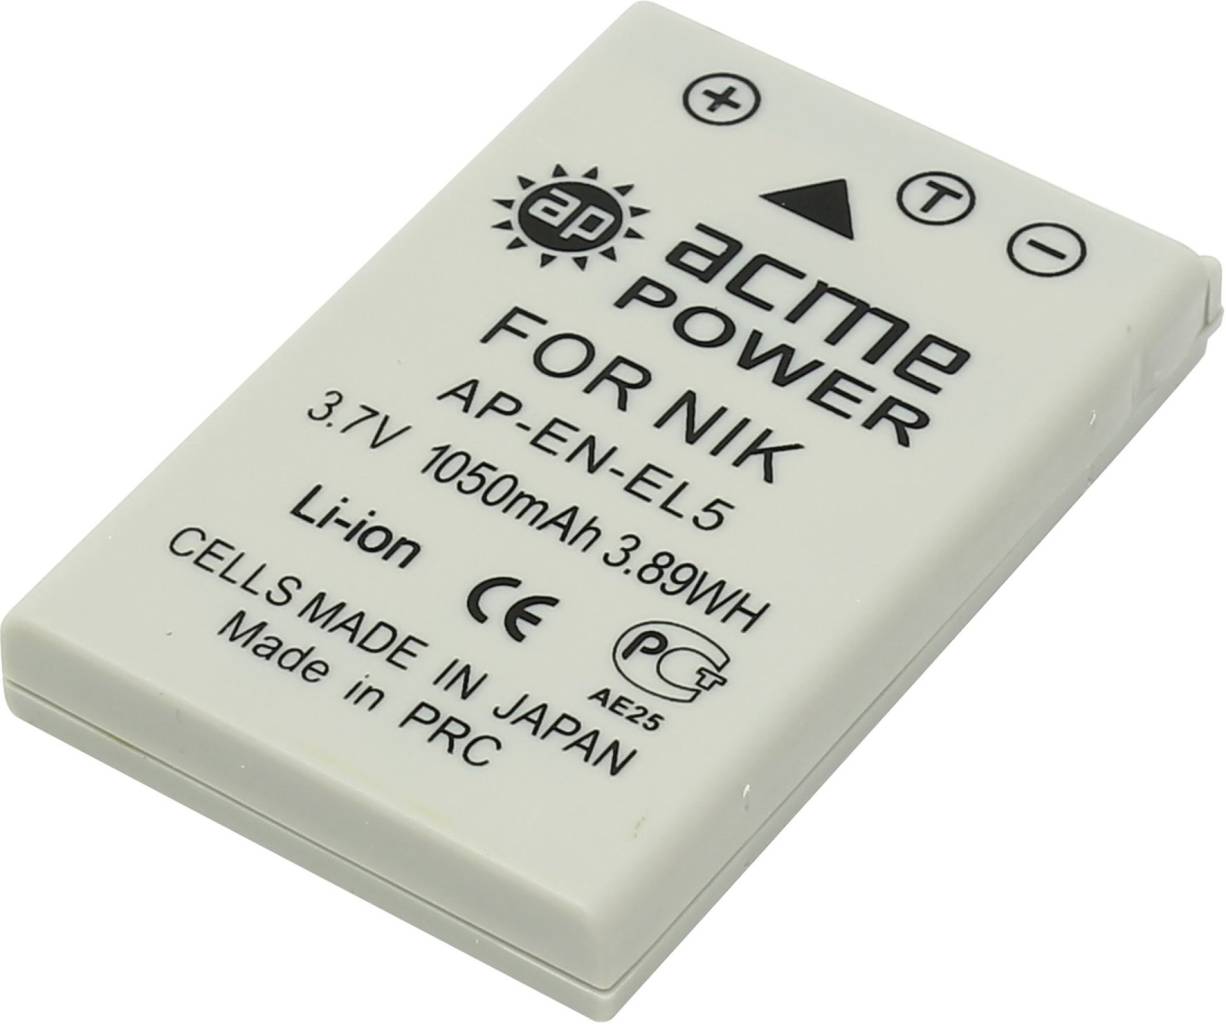   AcmePower AP-EN-EL5 (Li-Ion, 3.7V, 1100mAh)  Nikon EN-EL5